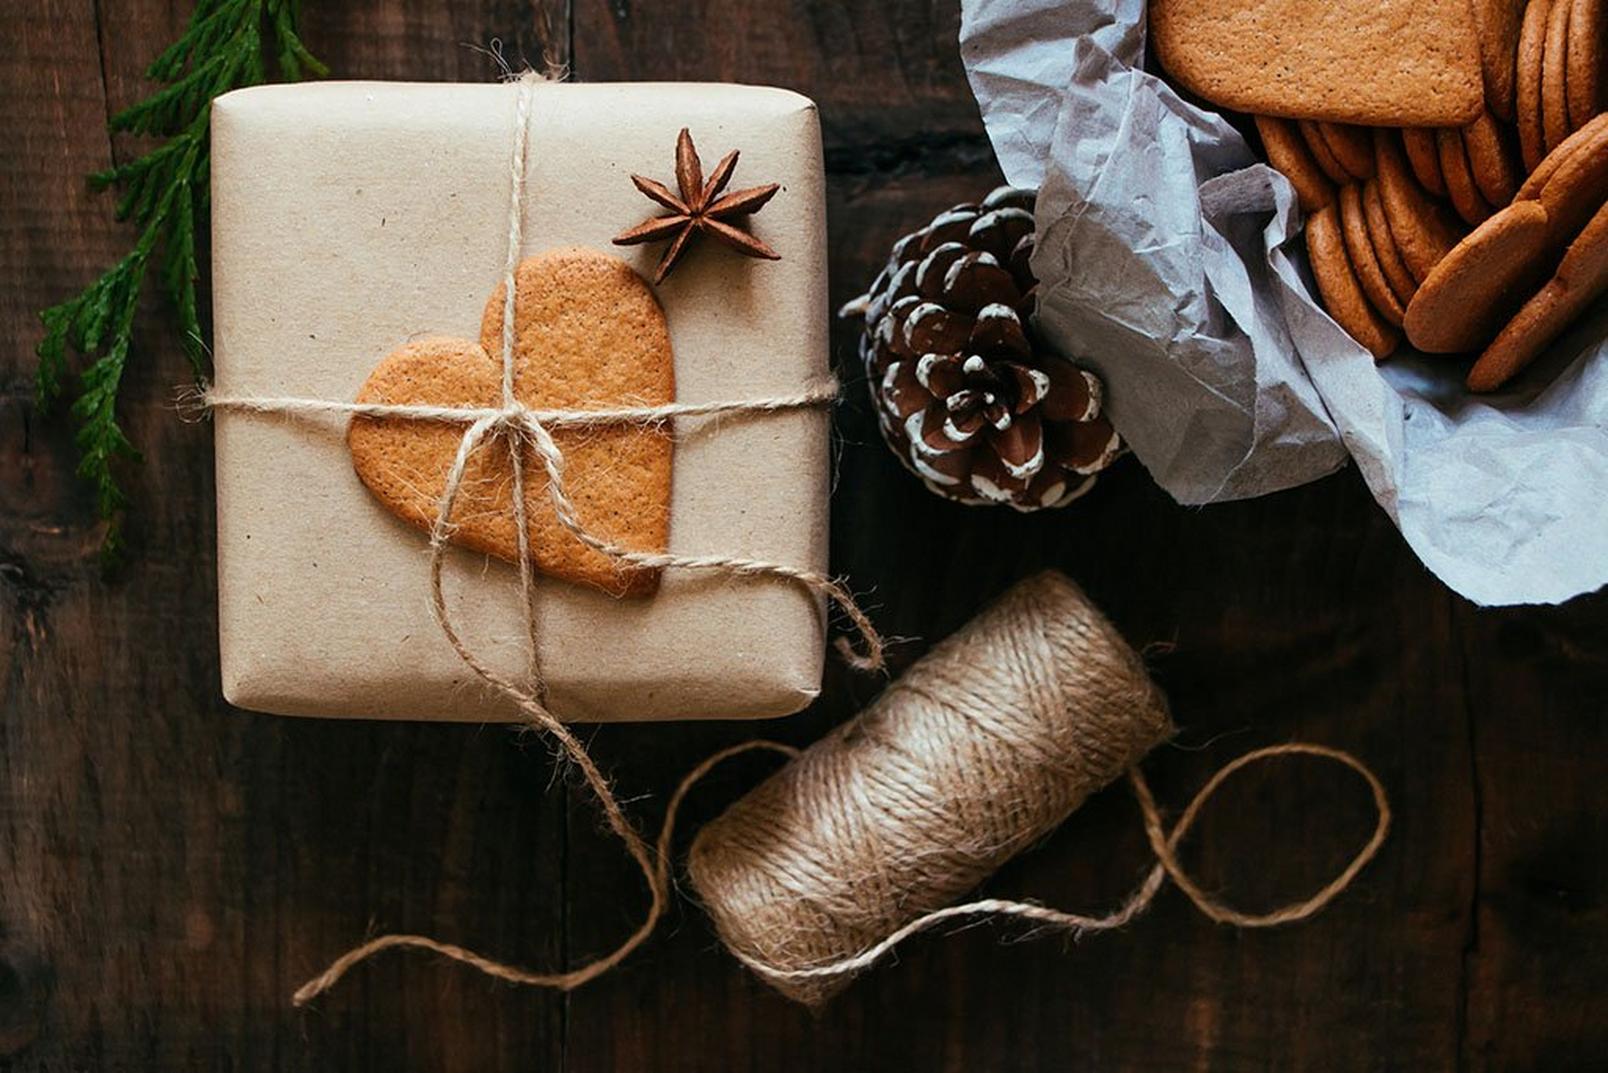 How To Wrap Christmas Presents Like A Pro